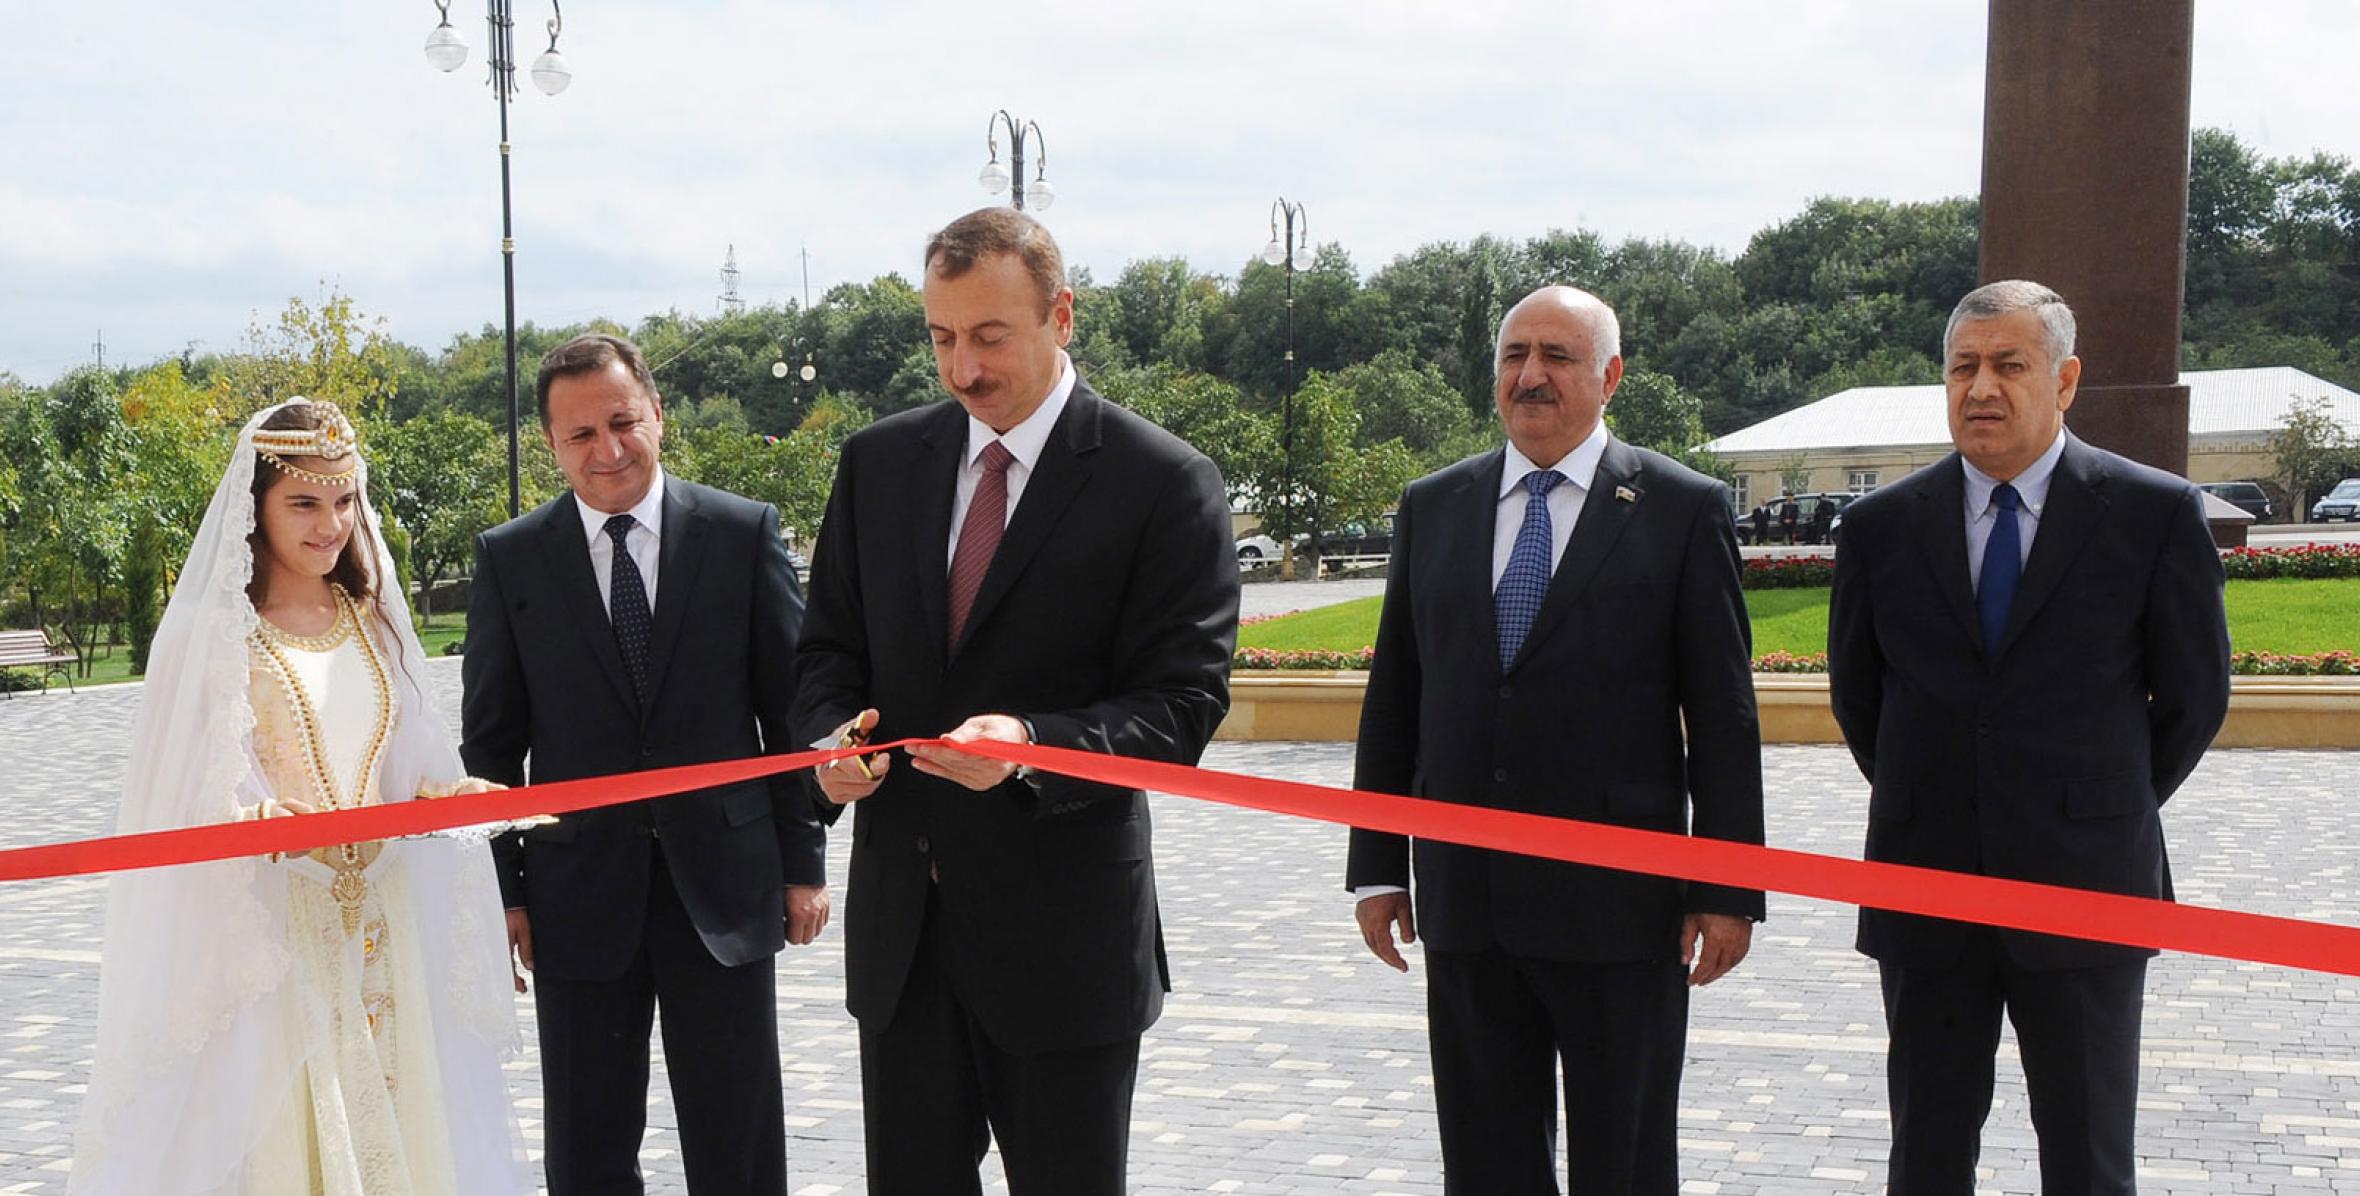 Ilham Aliyev attended the opening of the Heydar Aliyev Center in Guba